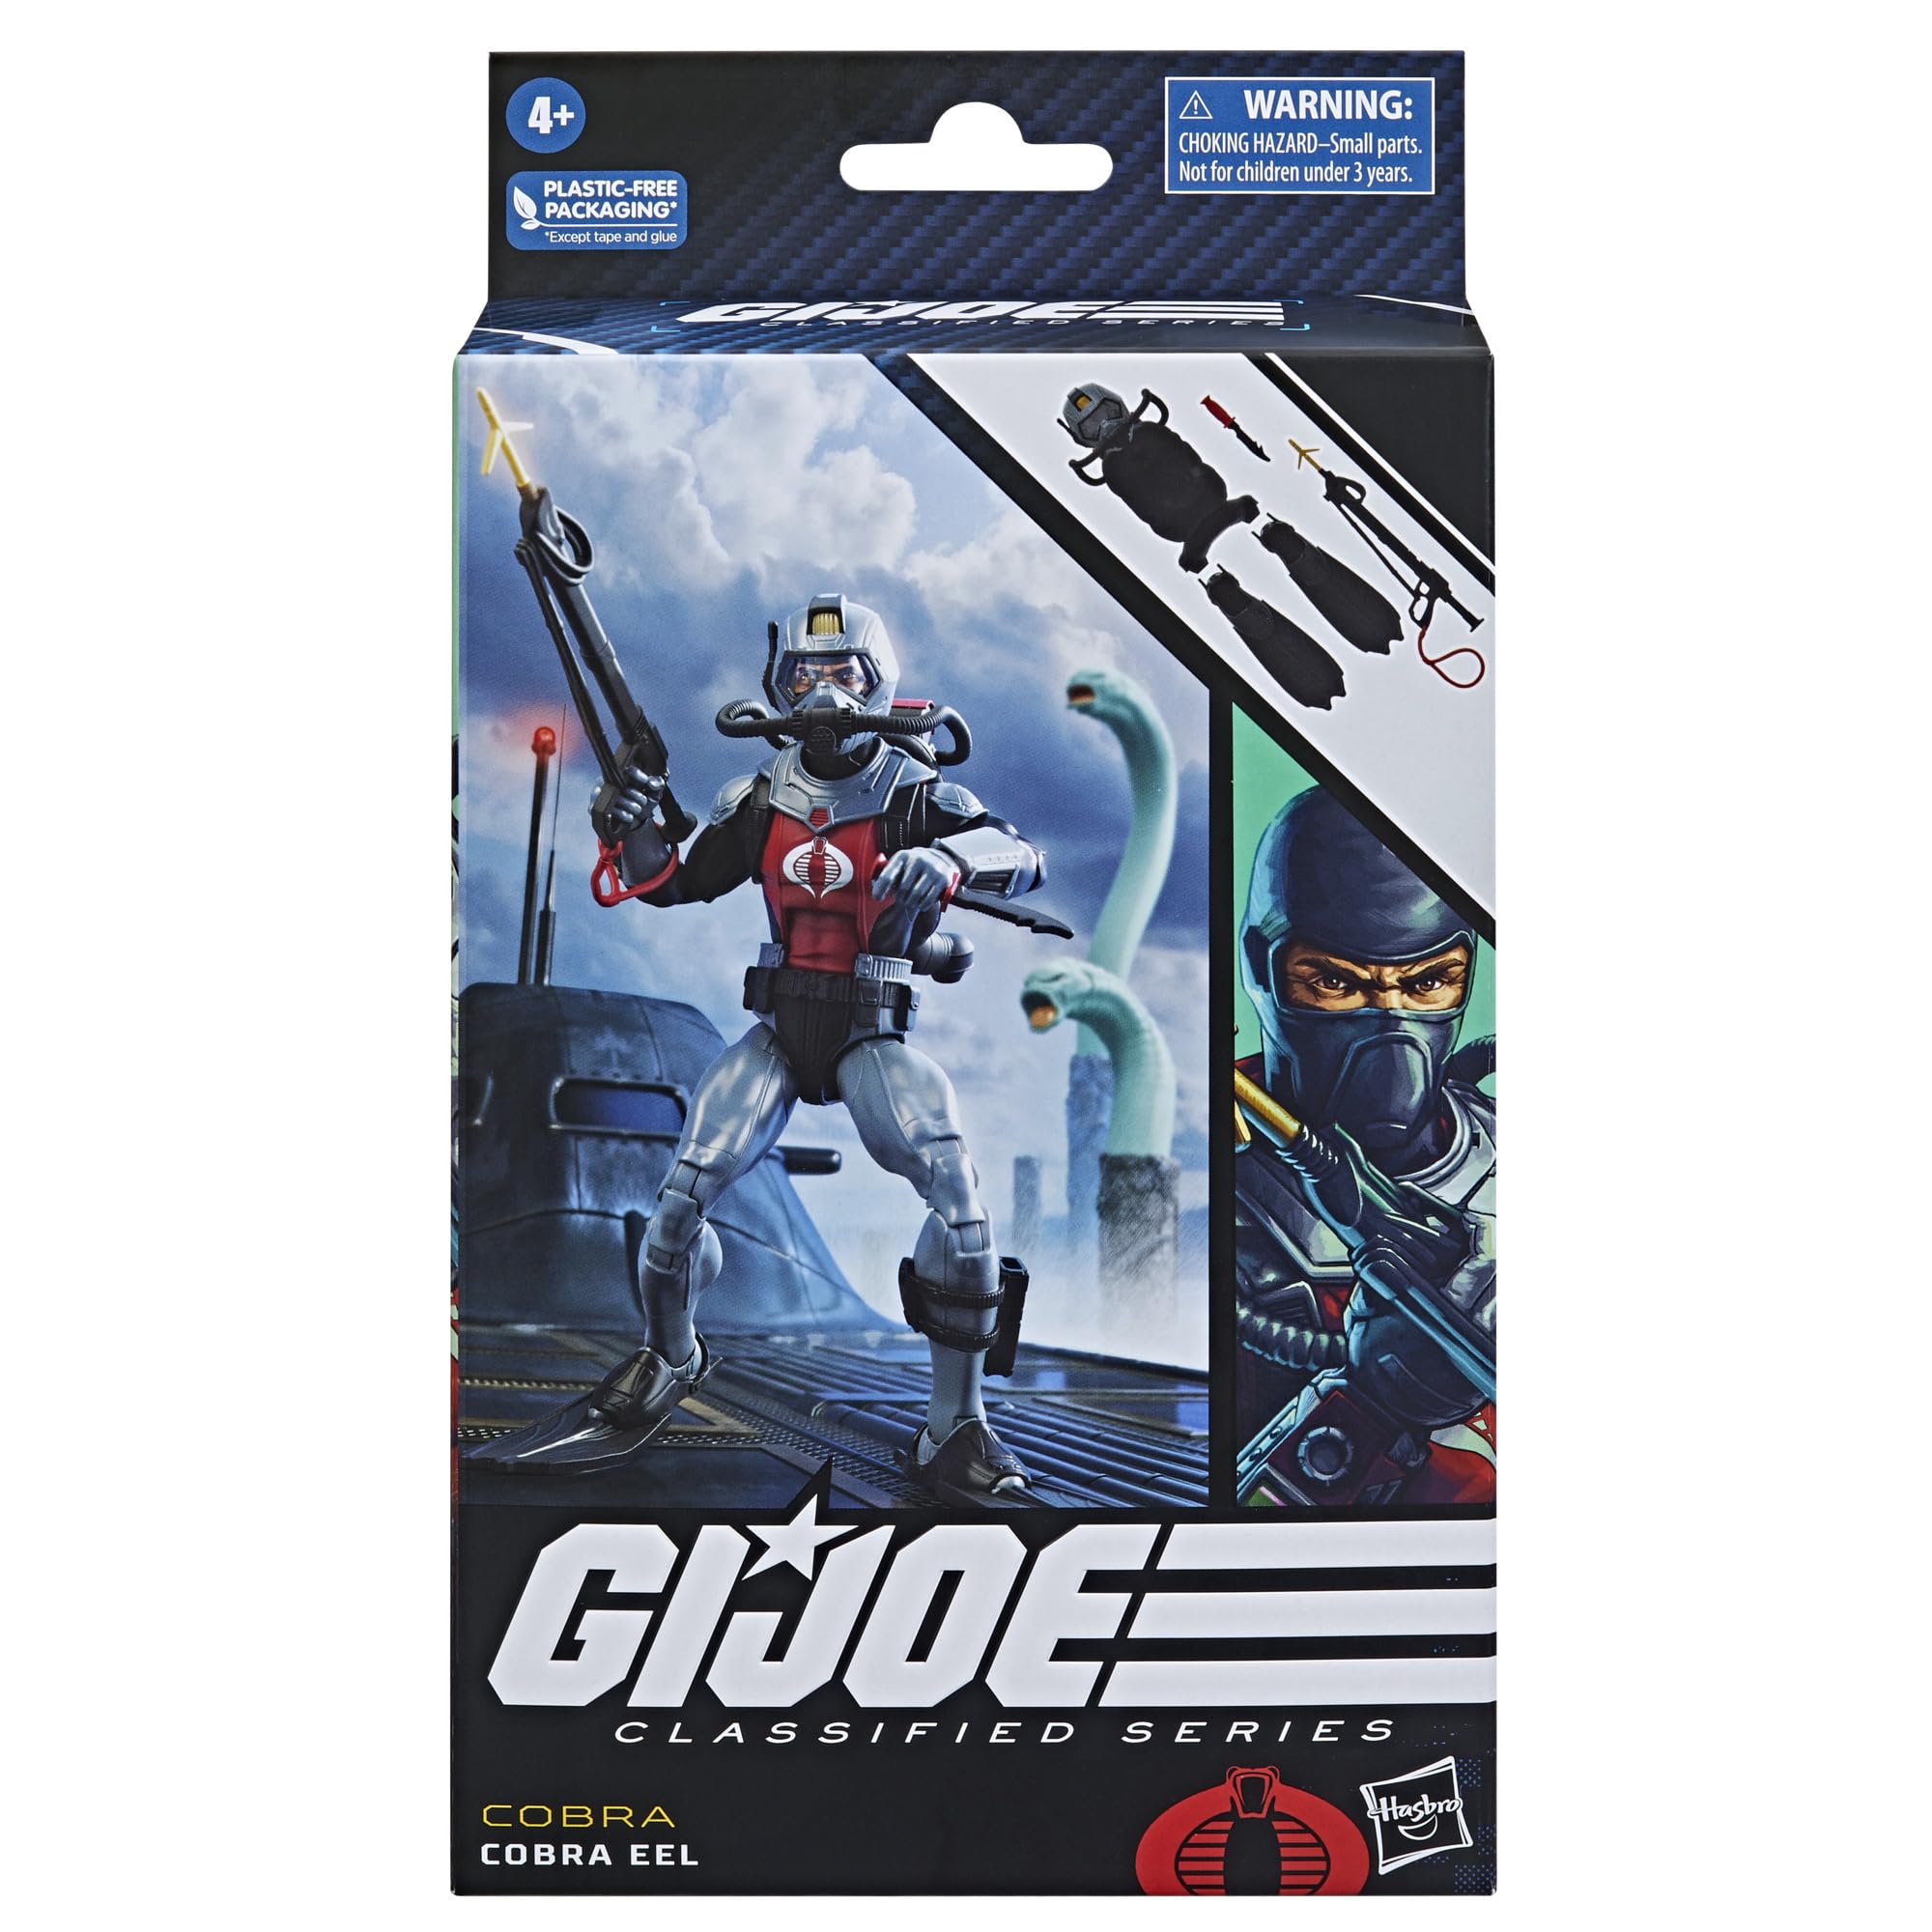 G.I. Joe Classified Series Cobra EEL, Collectible G.I. Joe Action Figures, 81, 6-Inch Action Figures for Boys & Girls, with 6 Accessories (Amazon Exclusive)